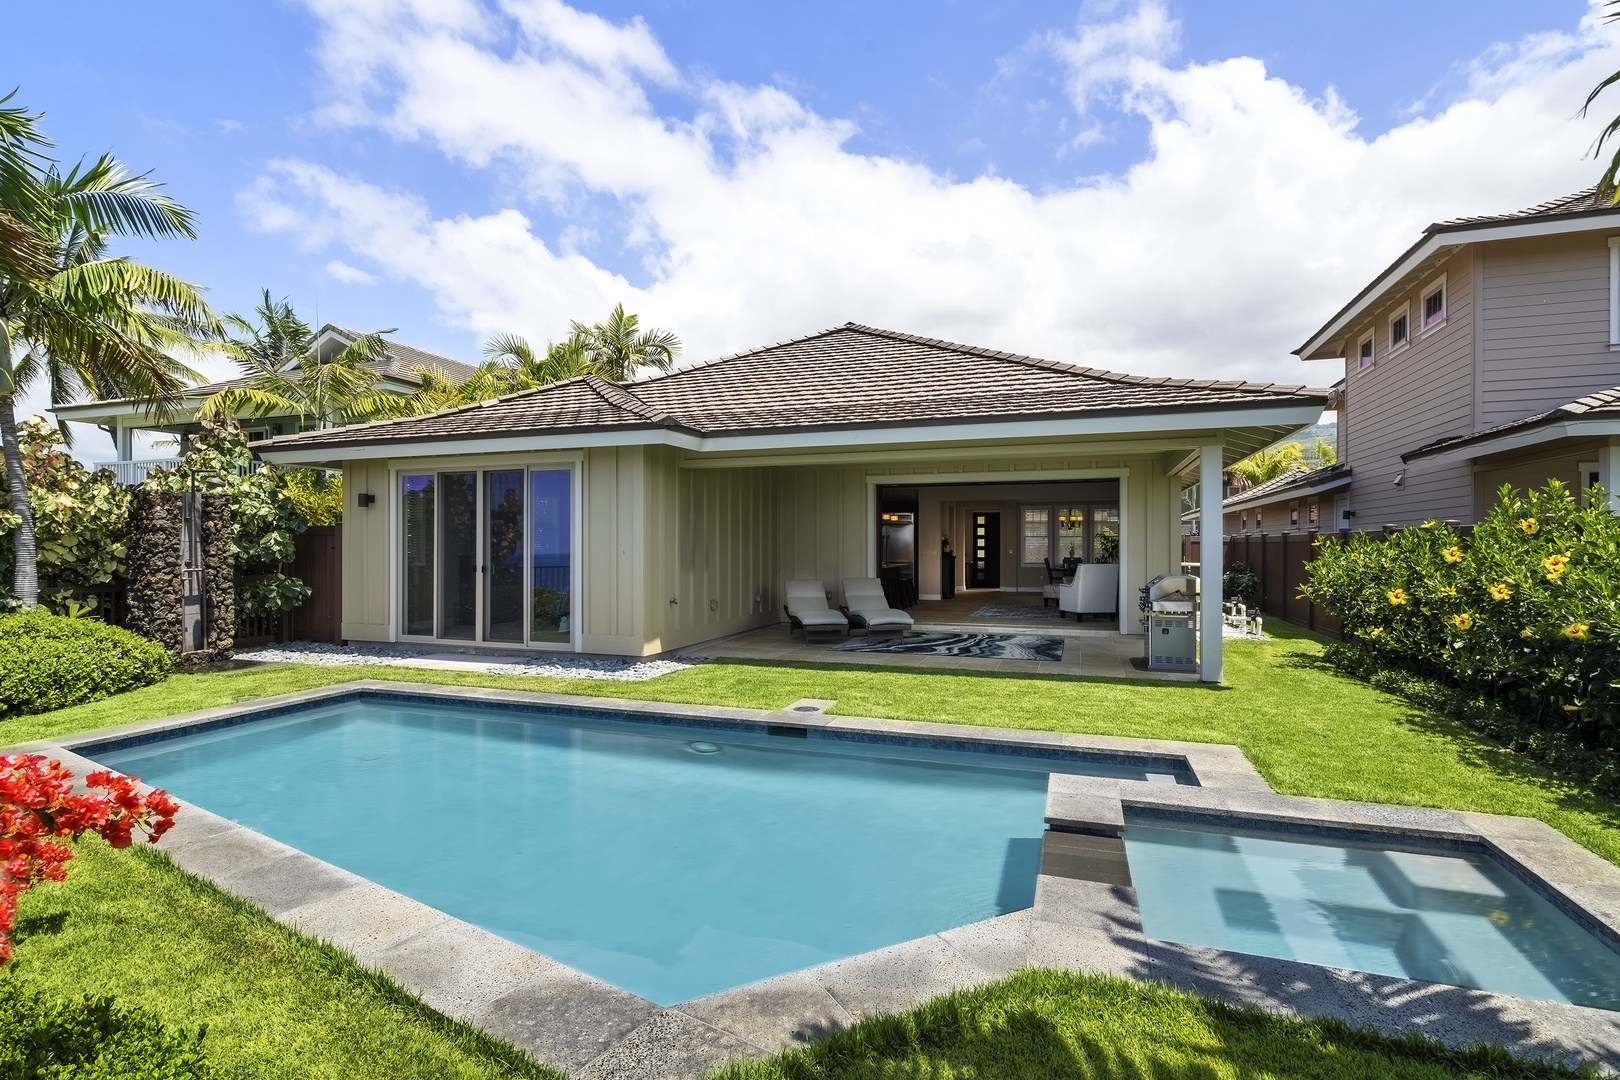 Kailua Kona Vacation Rentals, Blue Orca - No better setting to enjoy your Big Island Vacation!